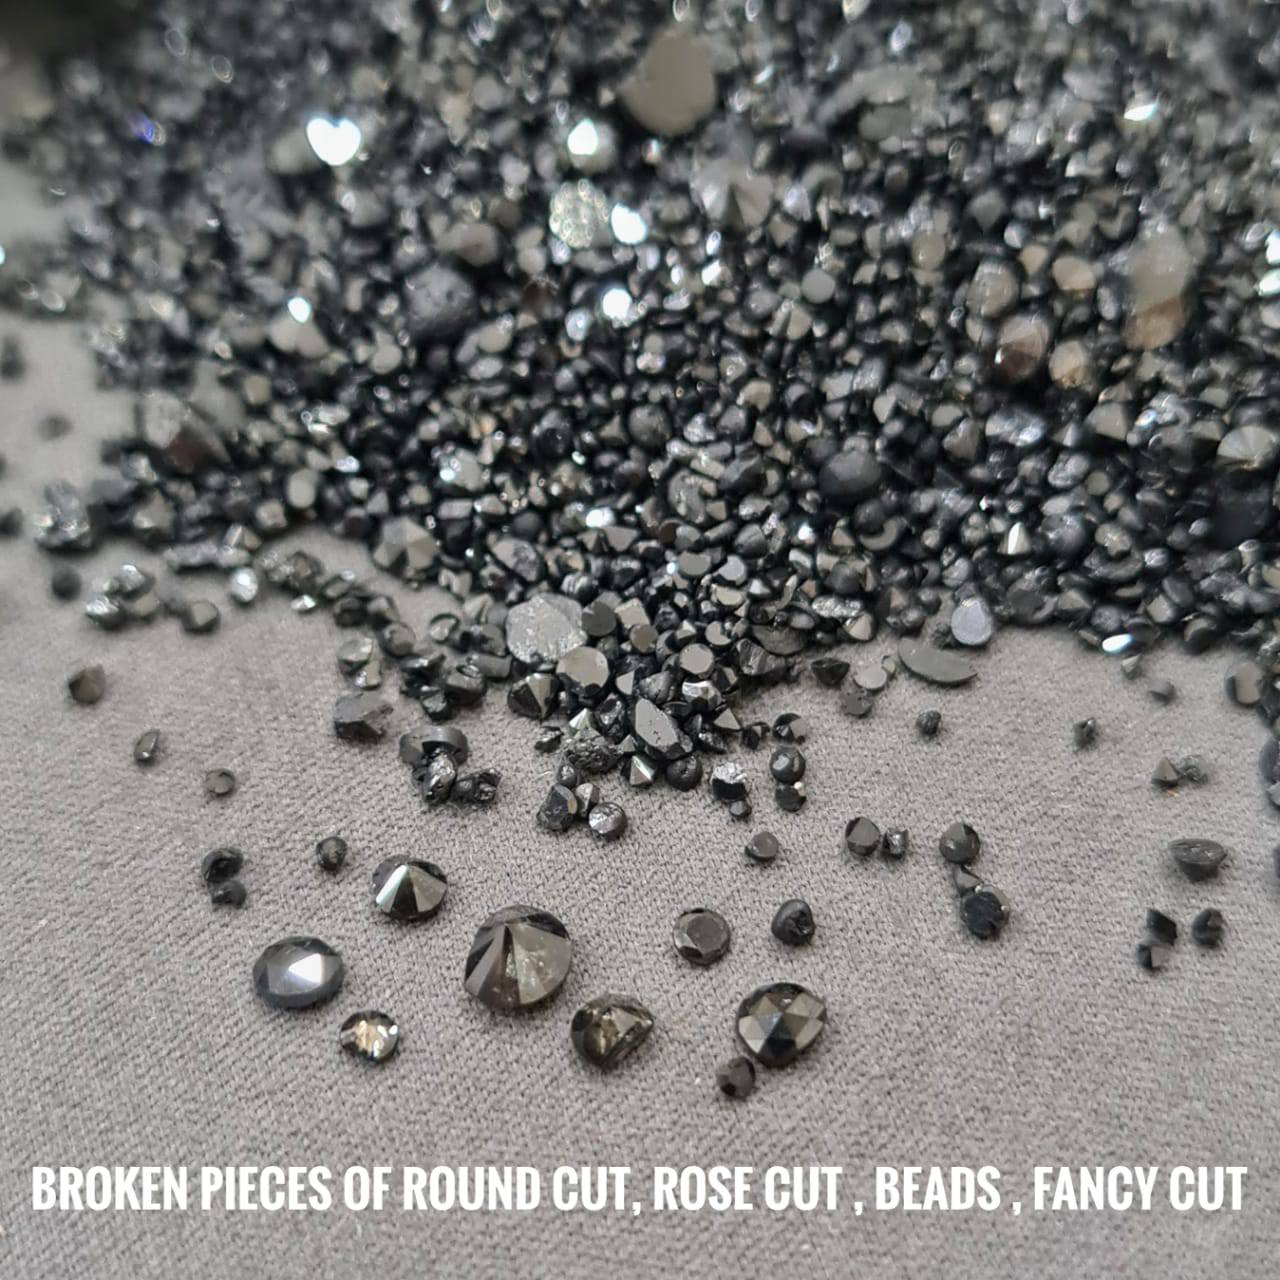 New🔥 Black Diamond Broken Pieces/ Sand/ Chip off - The LabradoriteKing